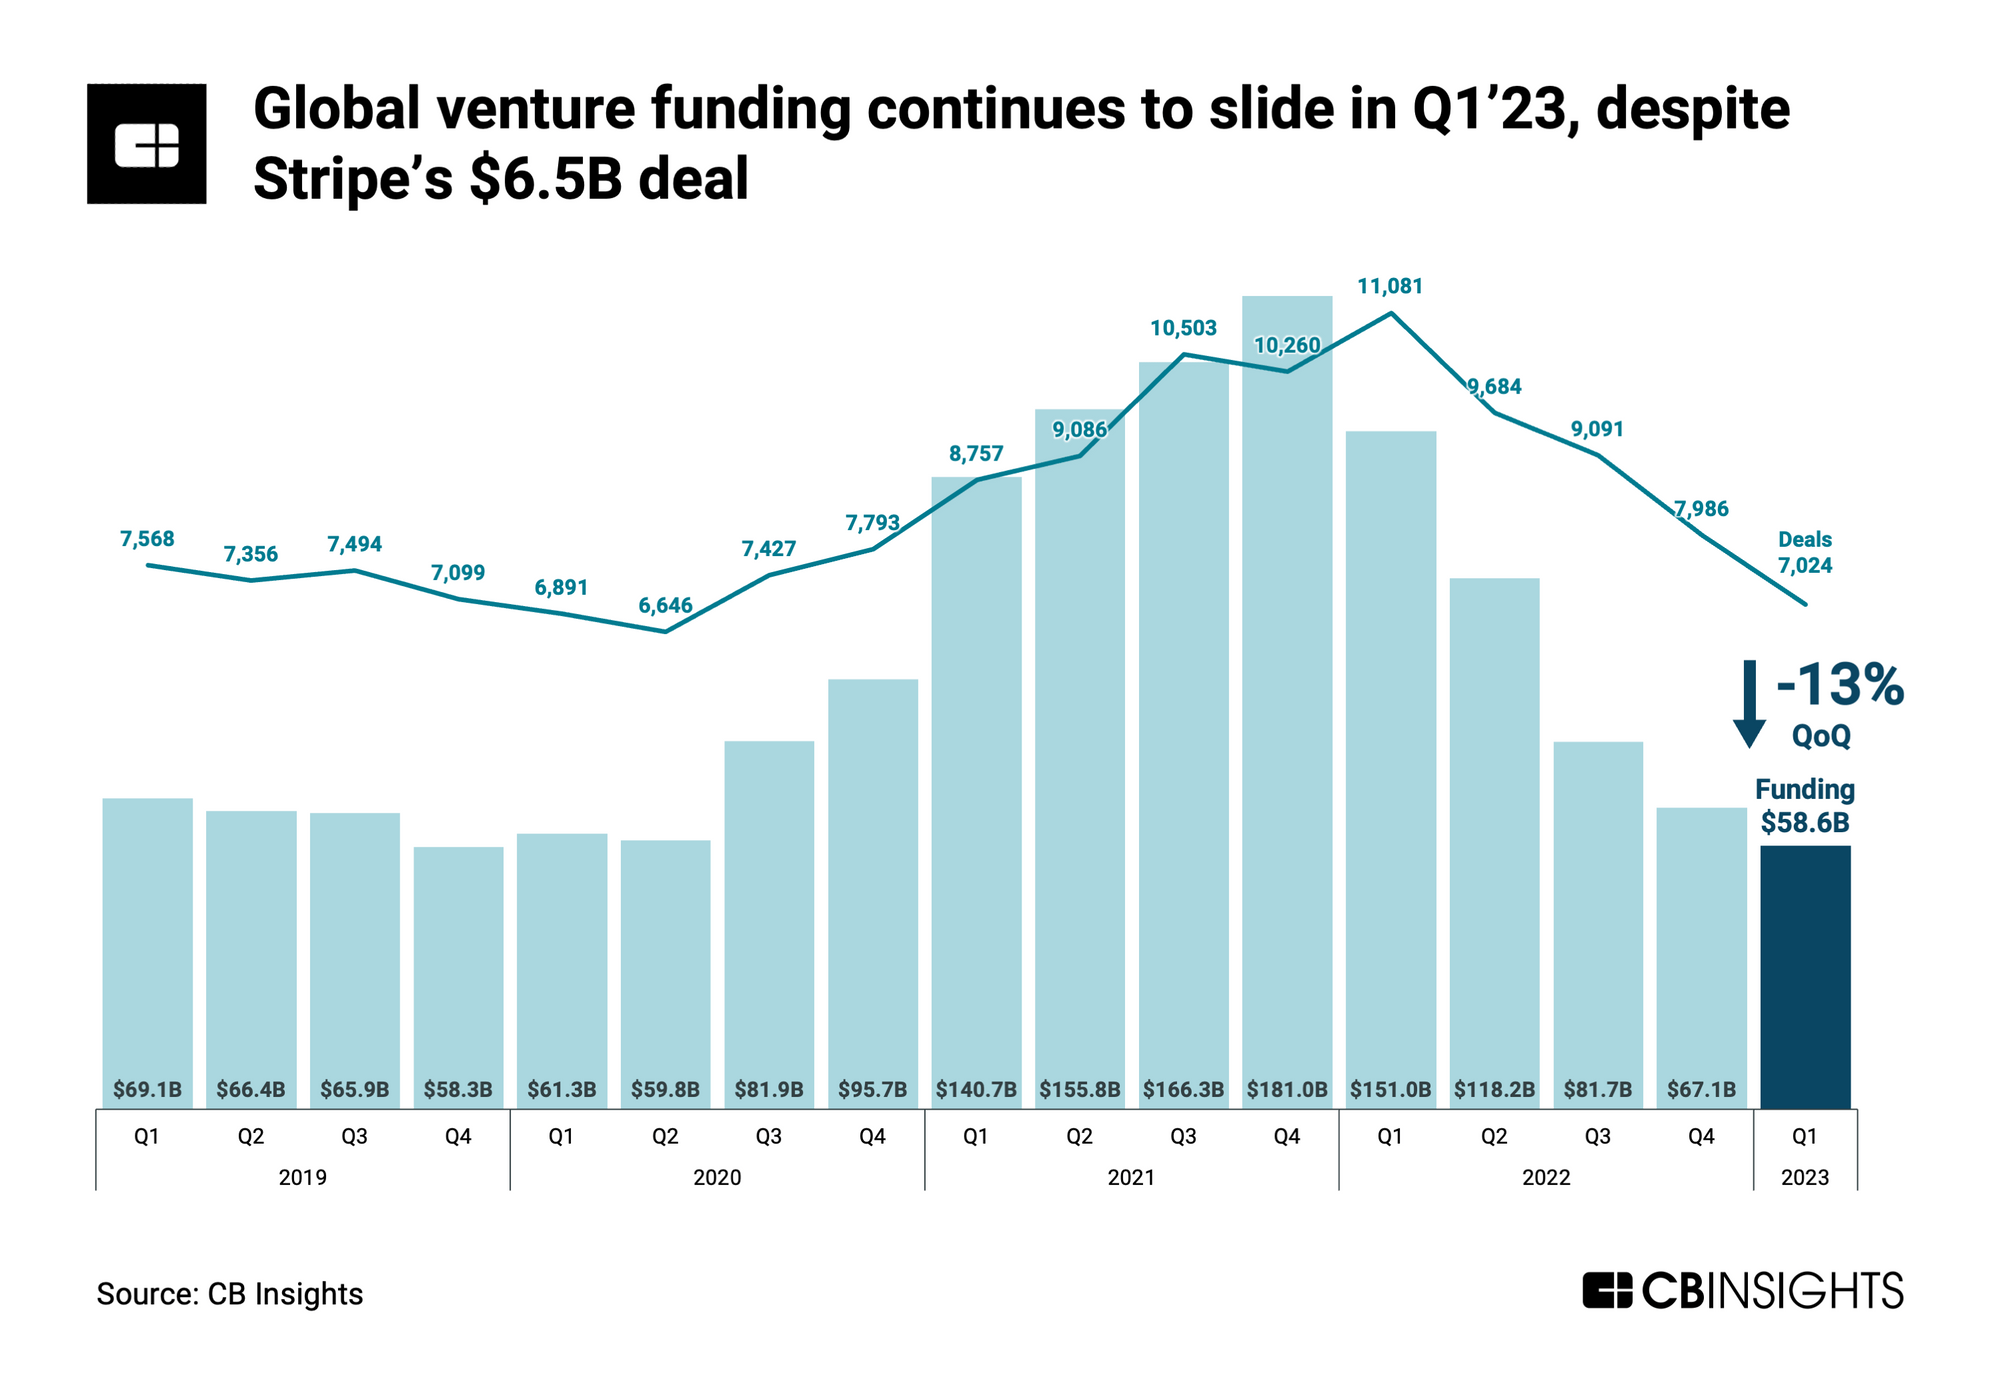 global venture funding decreasing in Q1 2023